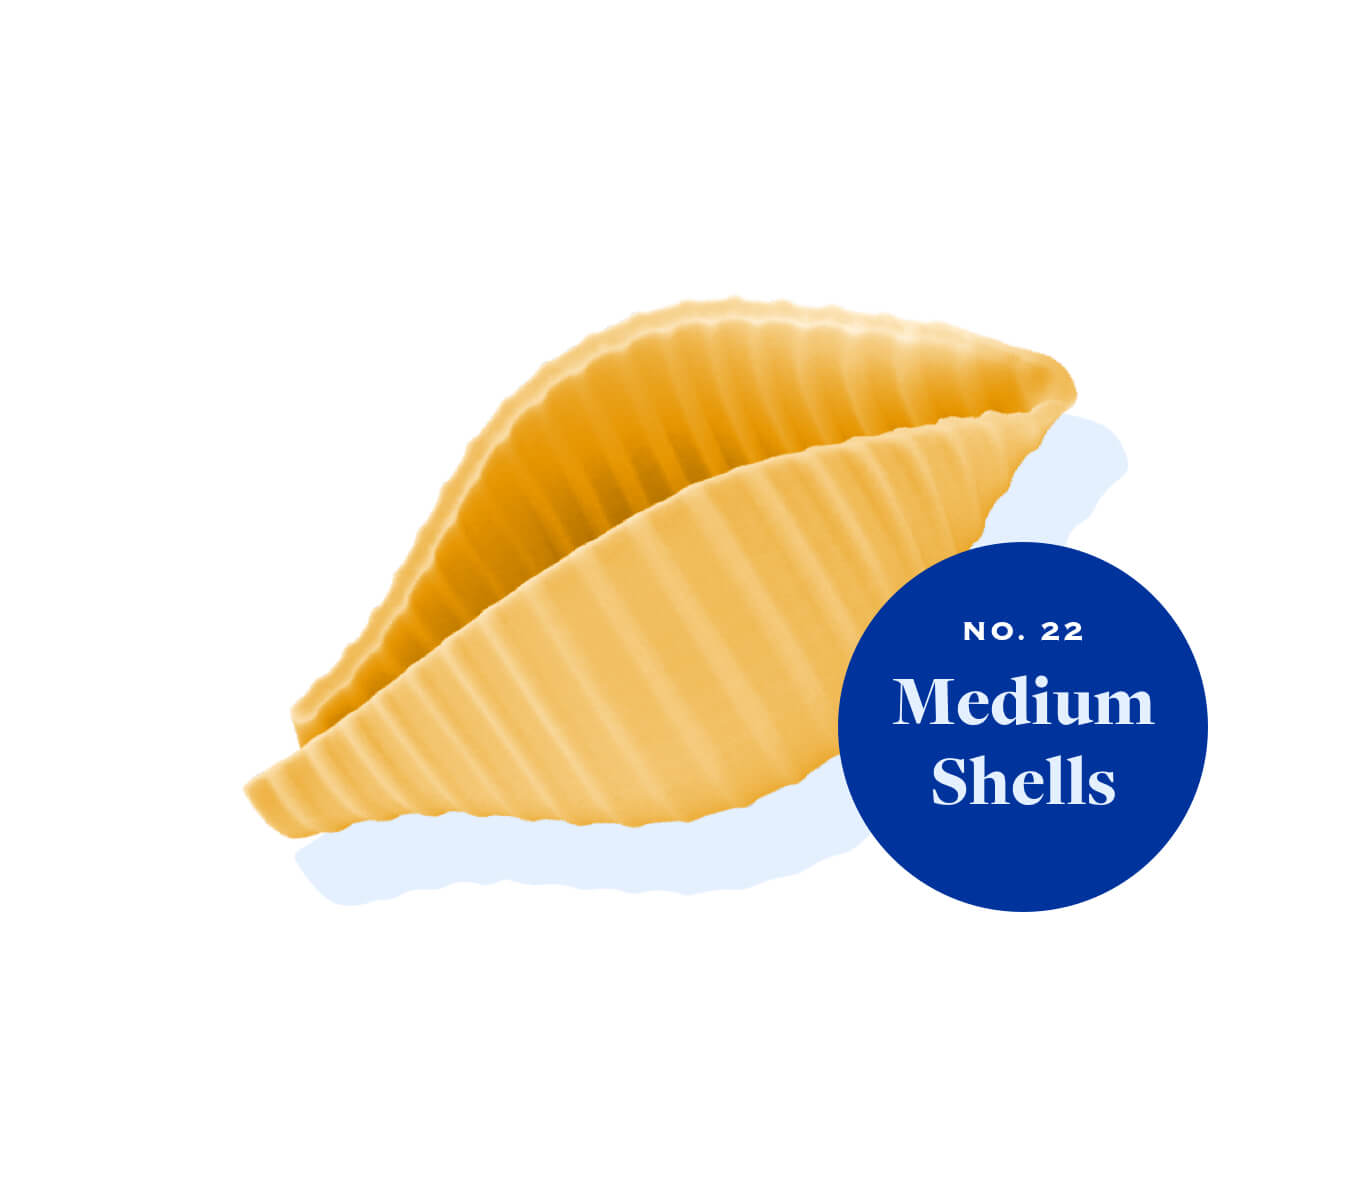 Ronzoni Medium Shells, pockets made for maximum cheese-per-bite.